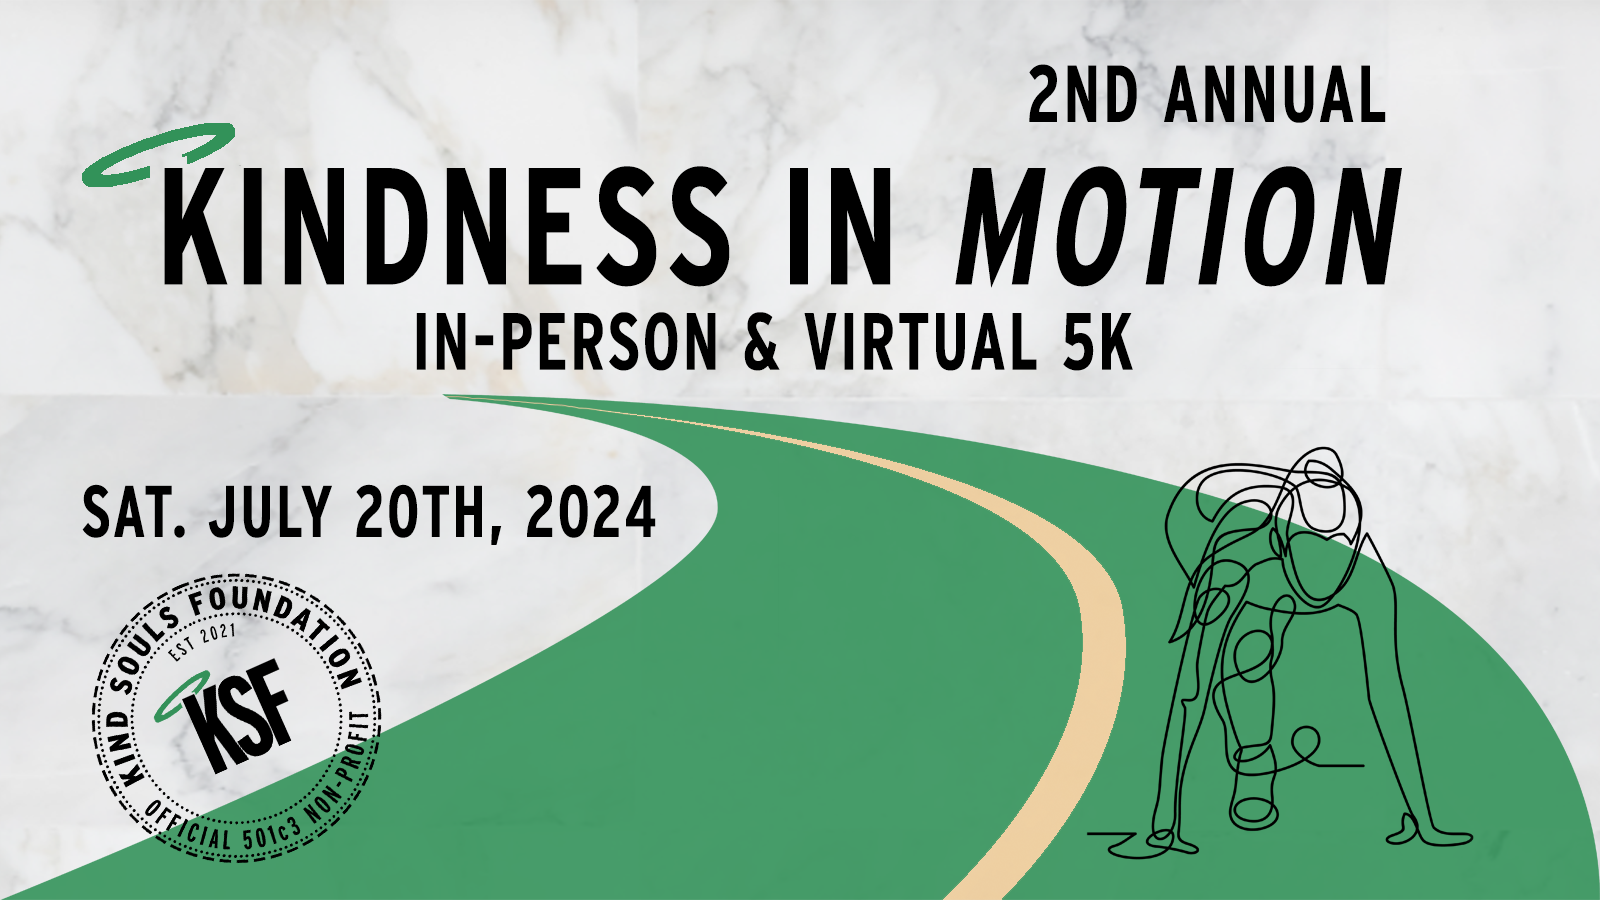 Kindness In Motion 5k Walk/Run